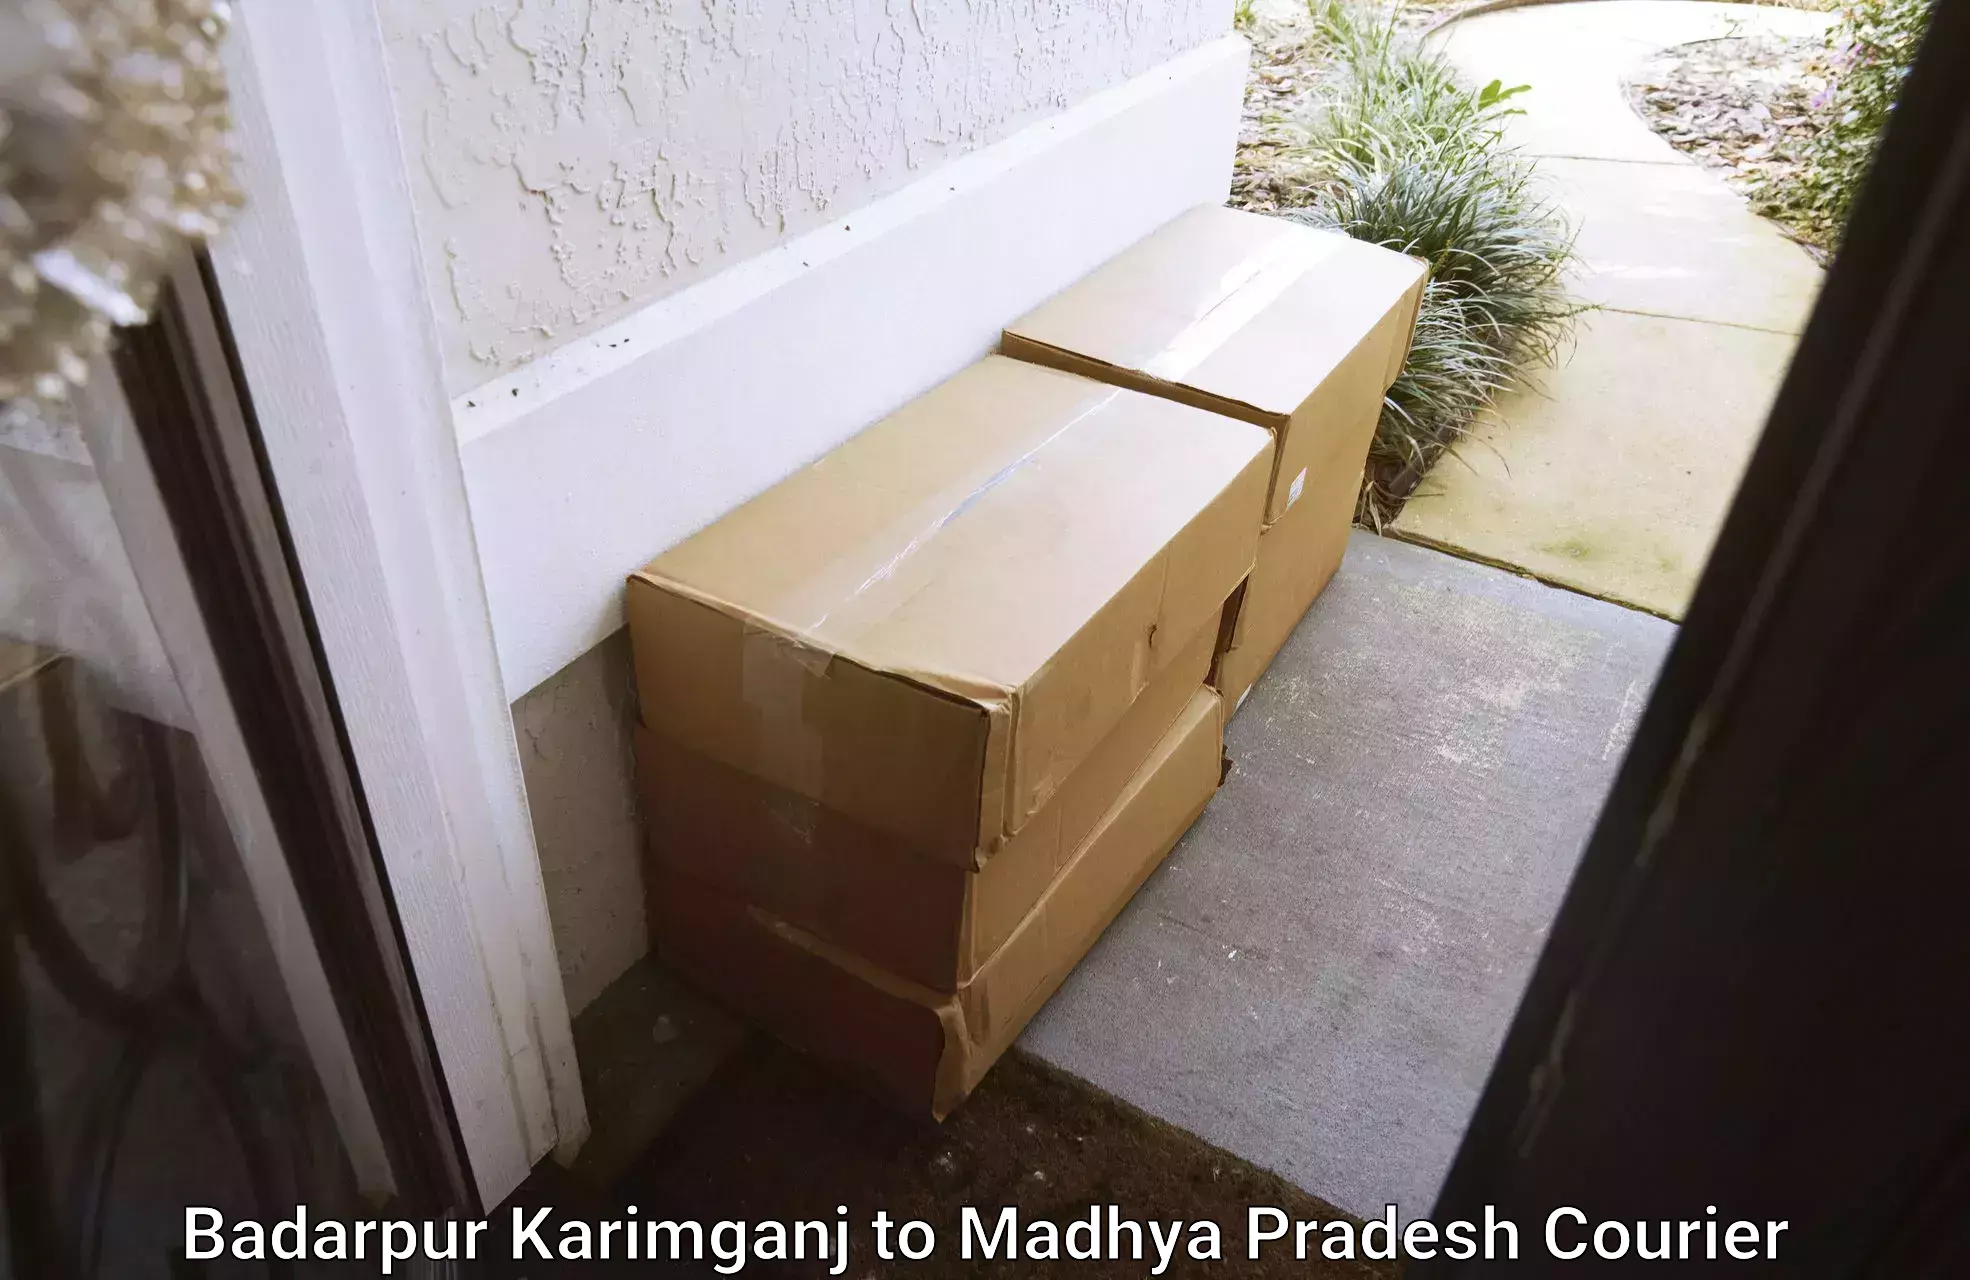 Courier service comparison Badarpur Karimganj to Ashoknagar